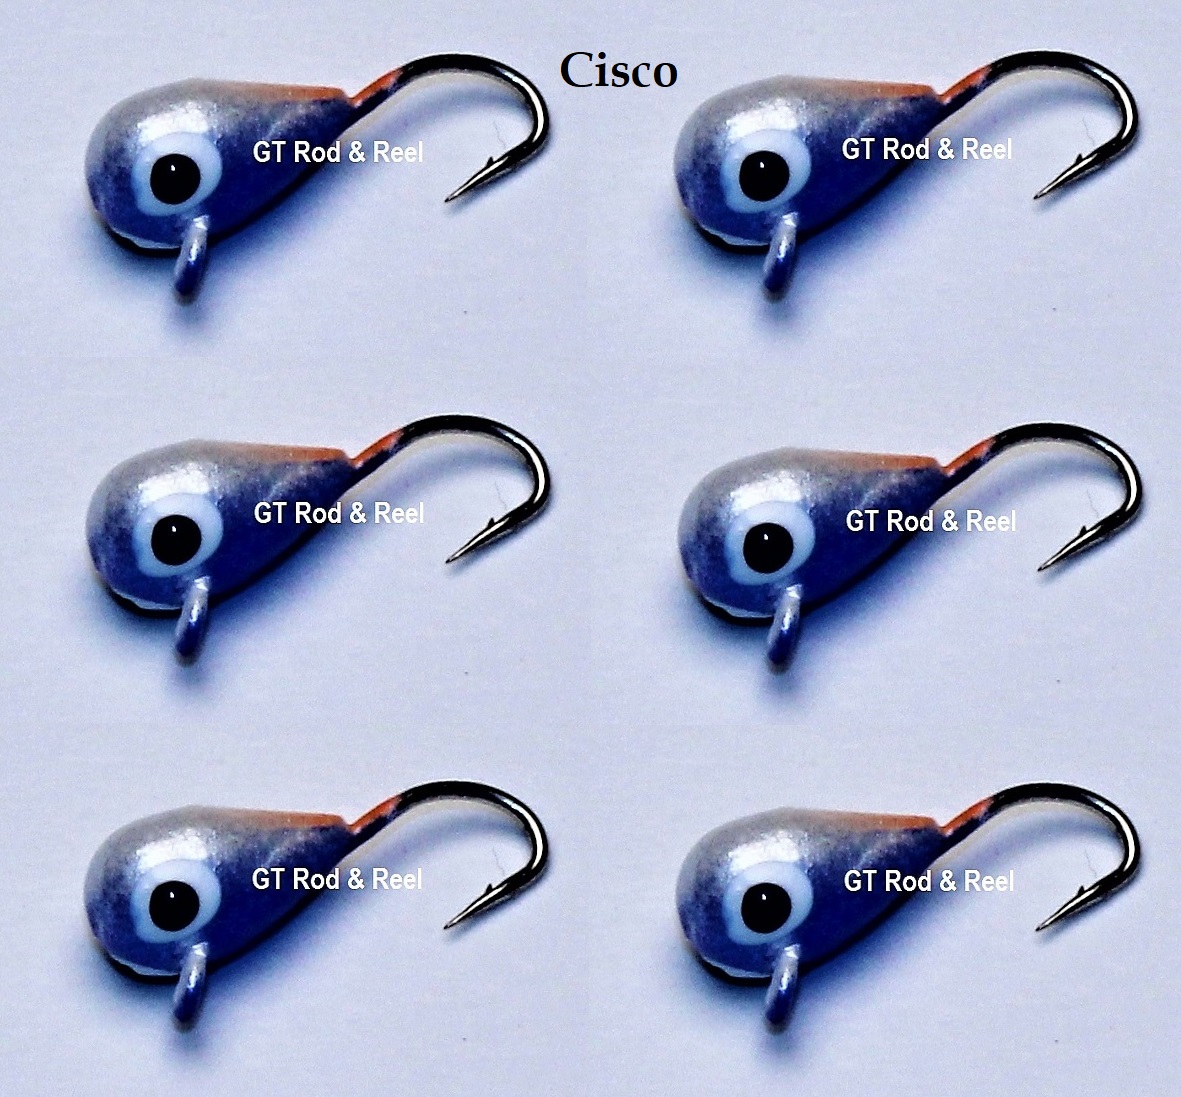 6 each, Group 1, Tungsten Ice Fishing Tear Drop Jig, .09 Gram, #14, Hook, 4.0mm, #62 Cisco